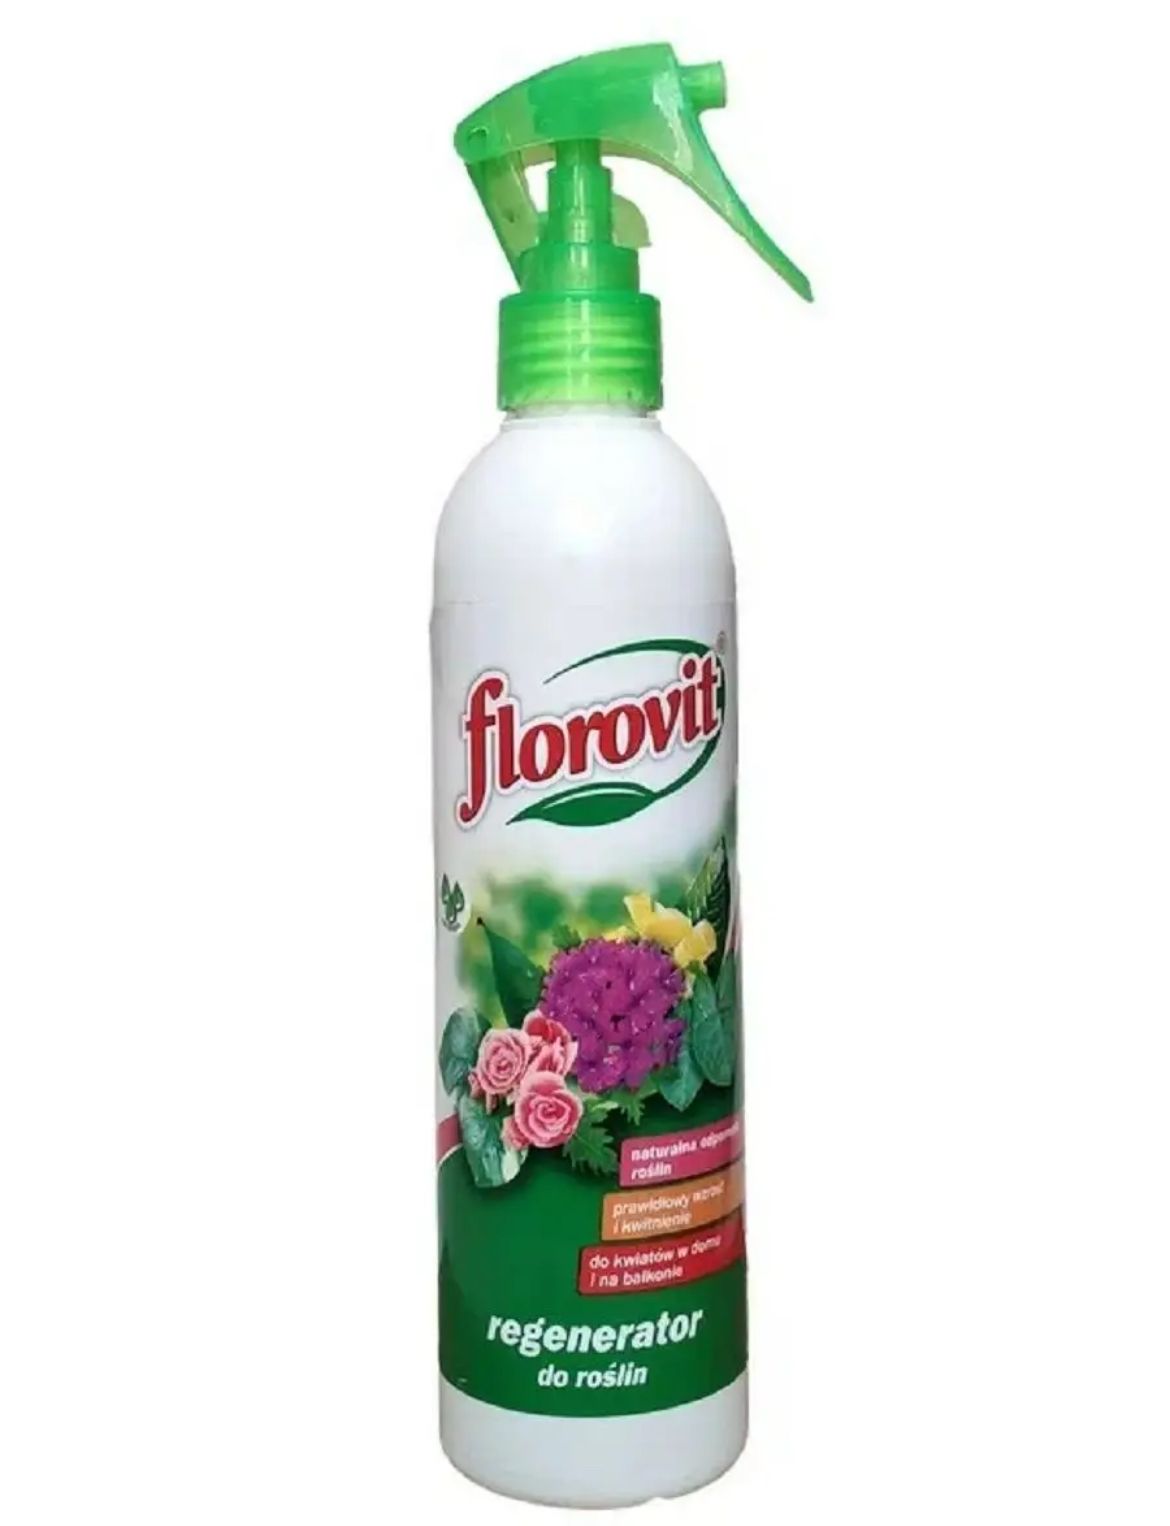 Flower spray. Аэрозоли для растений. Спрей для цветов. Спрэйдлярастений. Удобрение для цветов спрей.